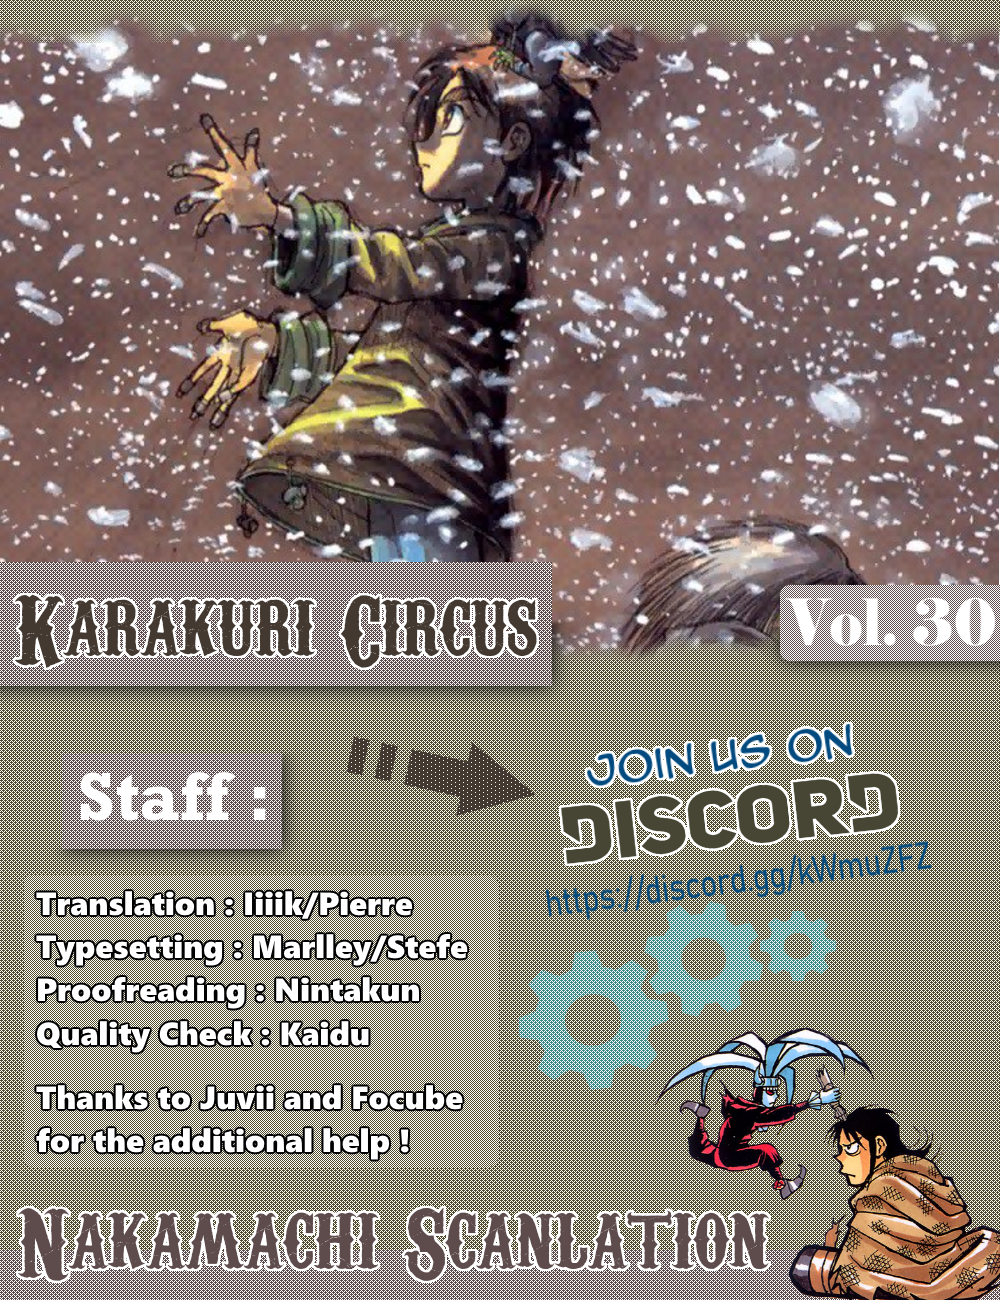 Karakuri Circus Chapter 286: Main Part - Welcome To The Kuroga Village - Act 4: Masaru And Heima - Picture 1